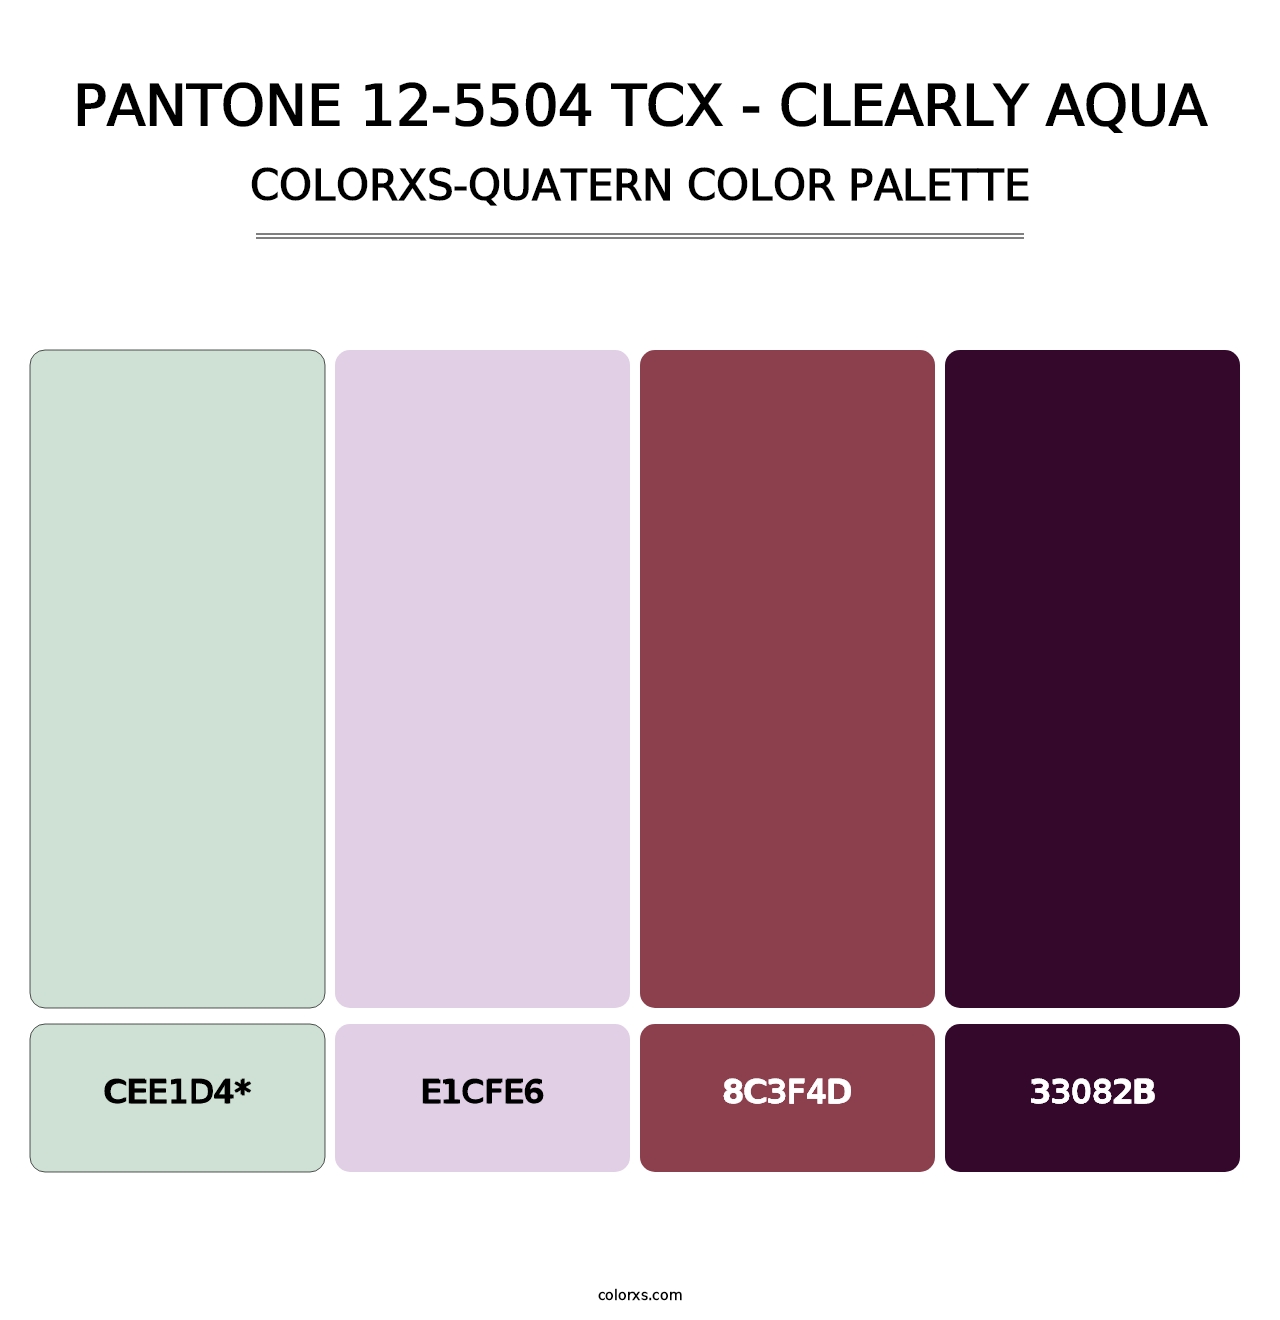 PANTONE 12-5504 TCX - Clearly Aqua - Colorxs Quatern Palette